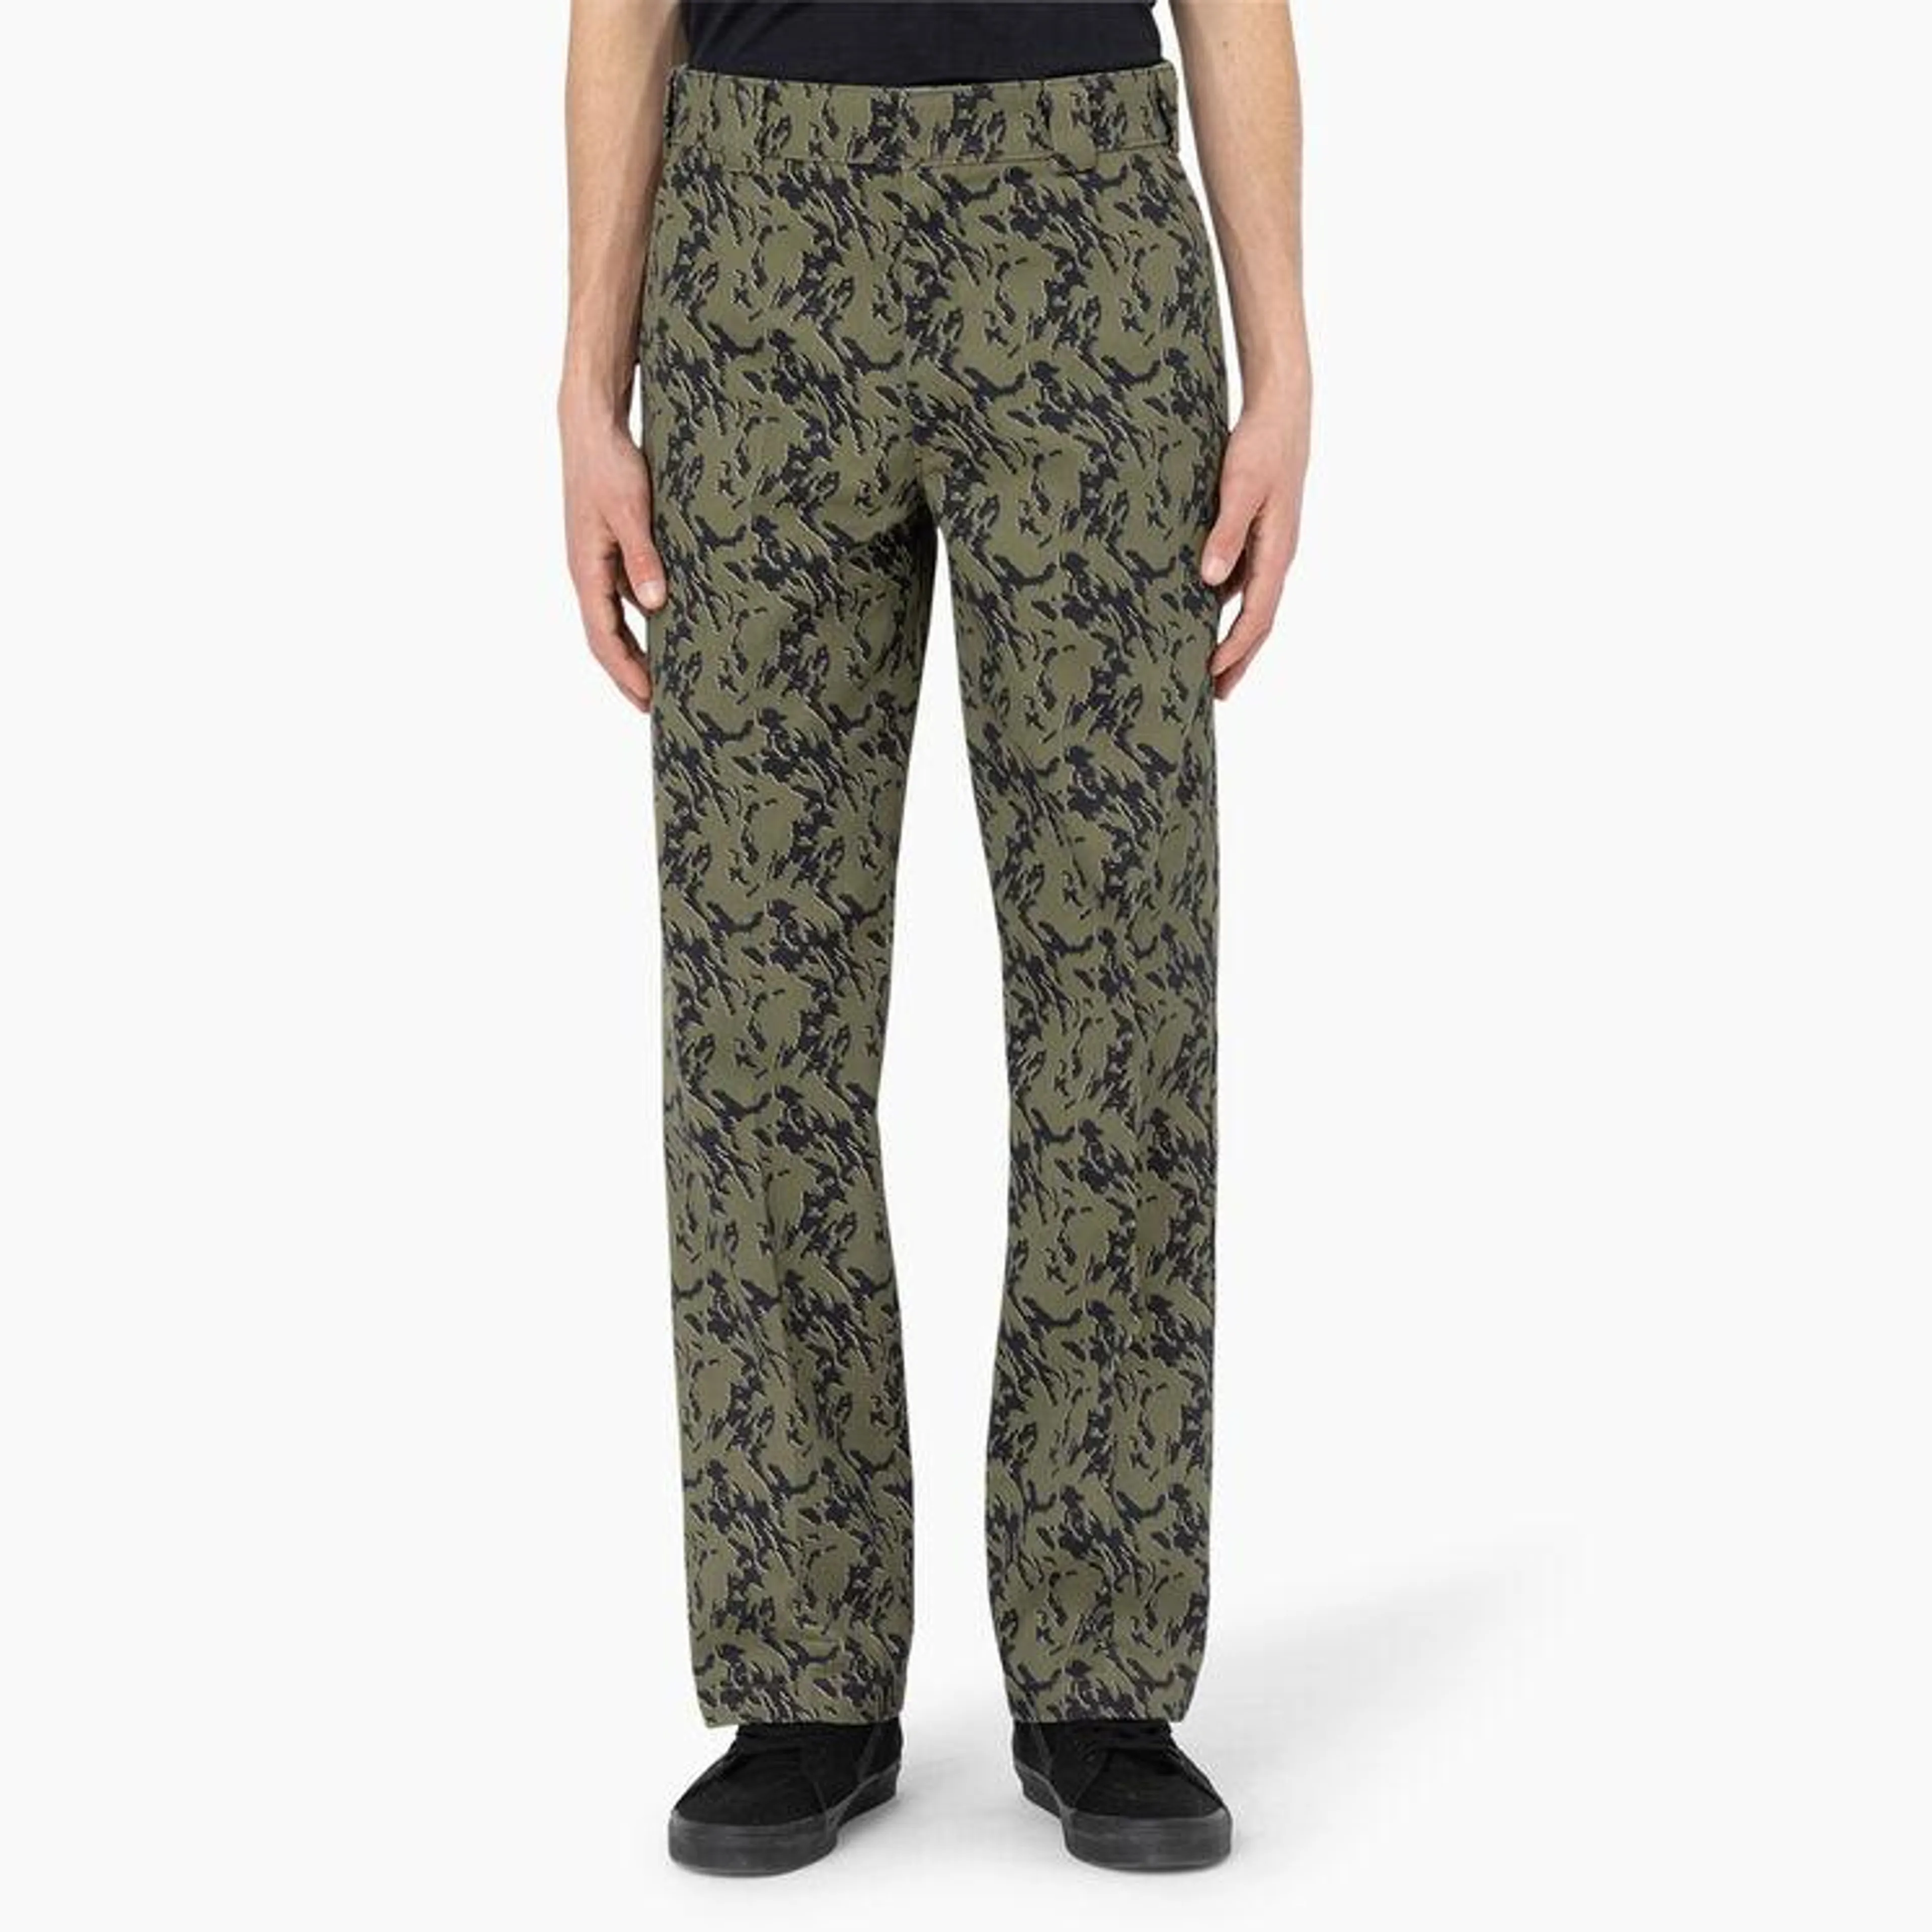 Drewsey Camo Work Pants, Military Green Glitch Camo